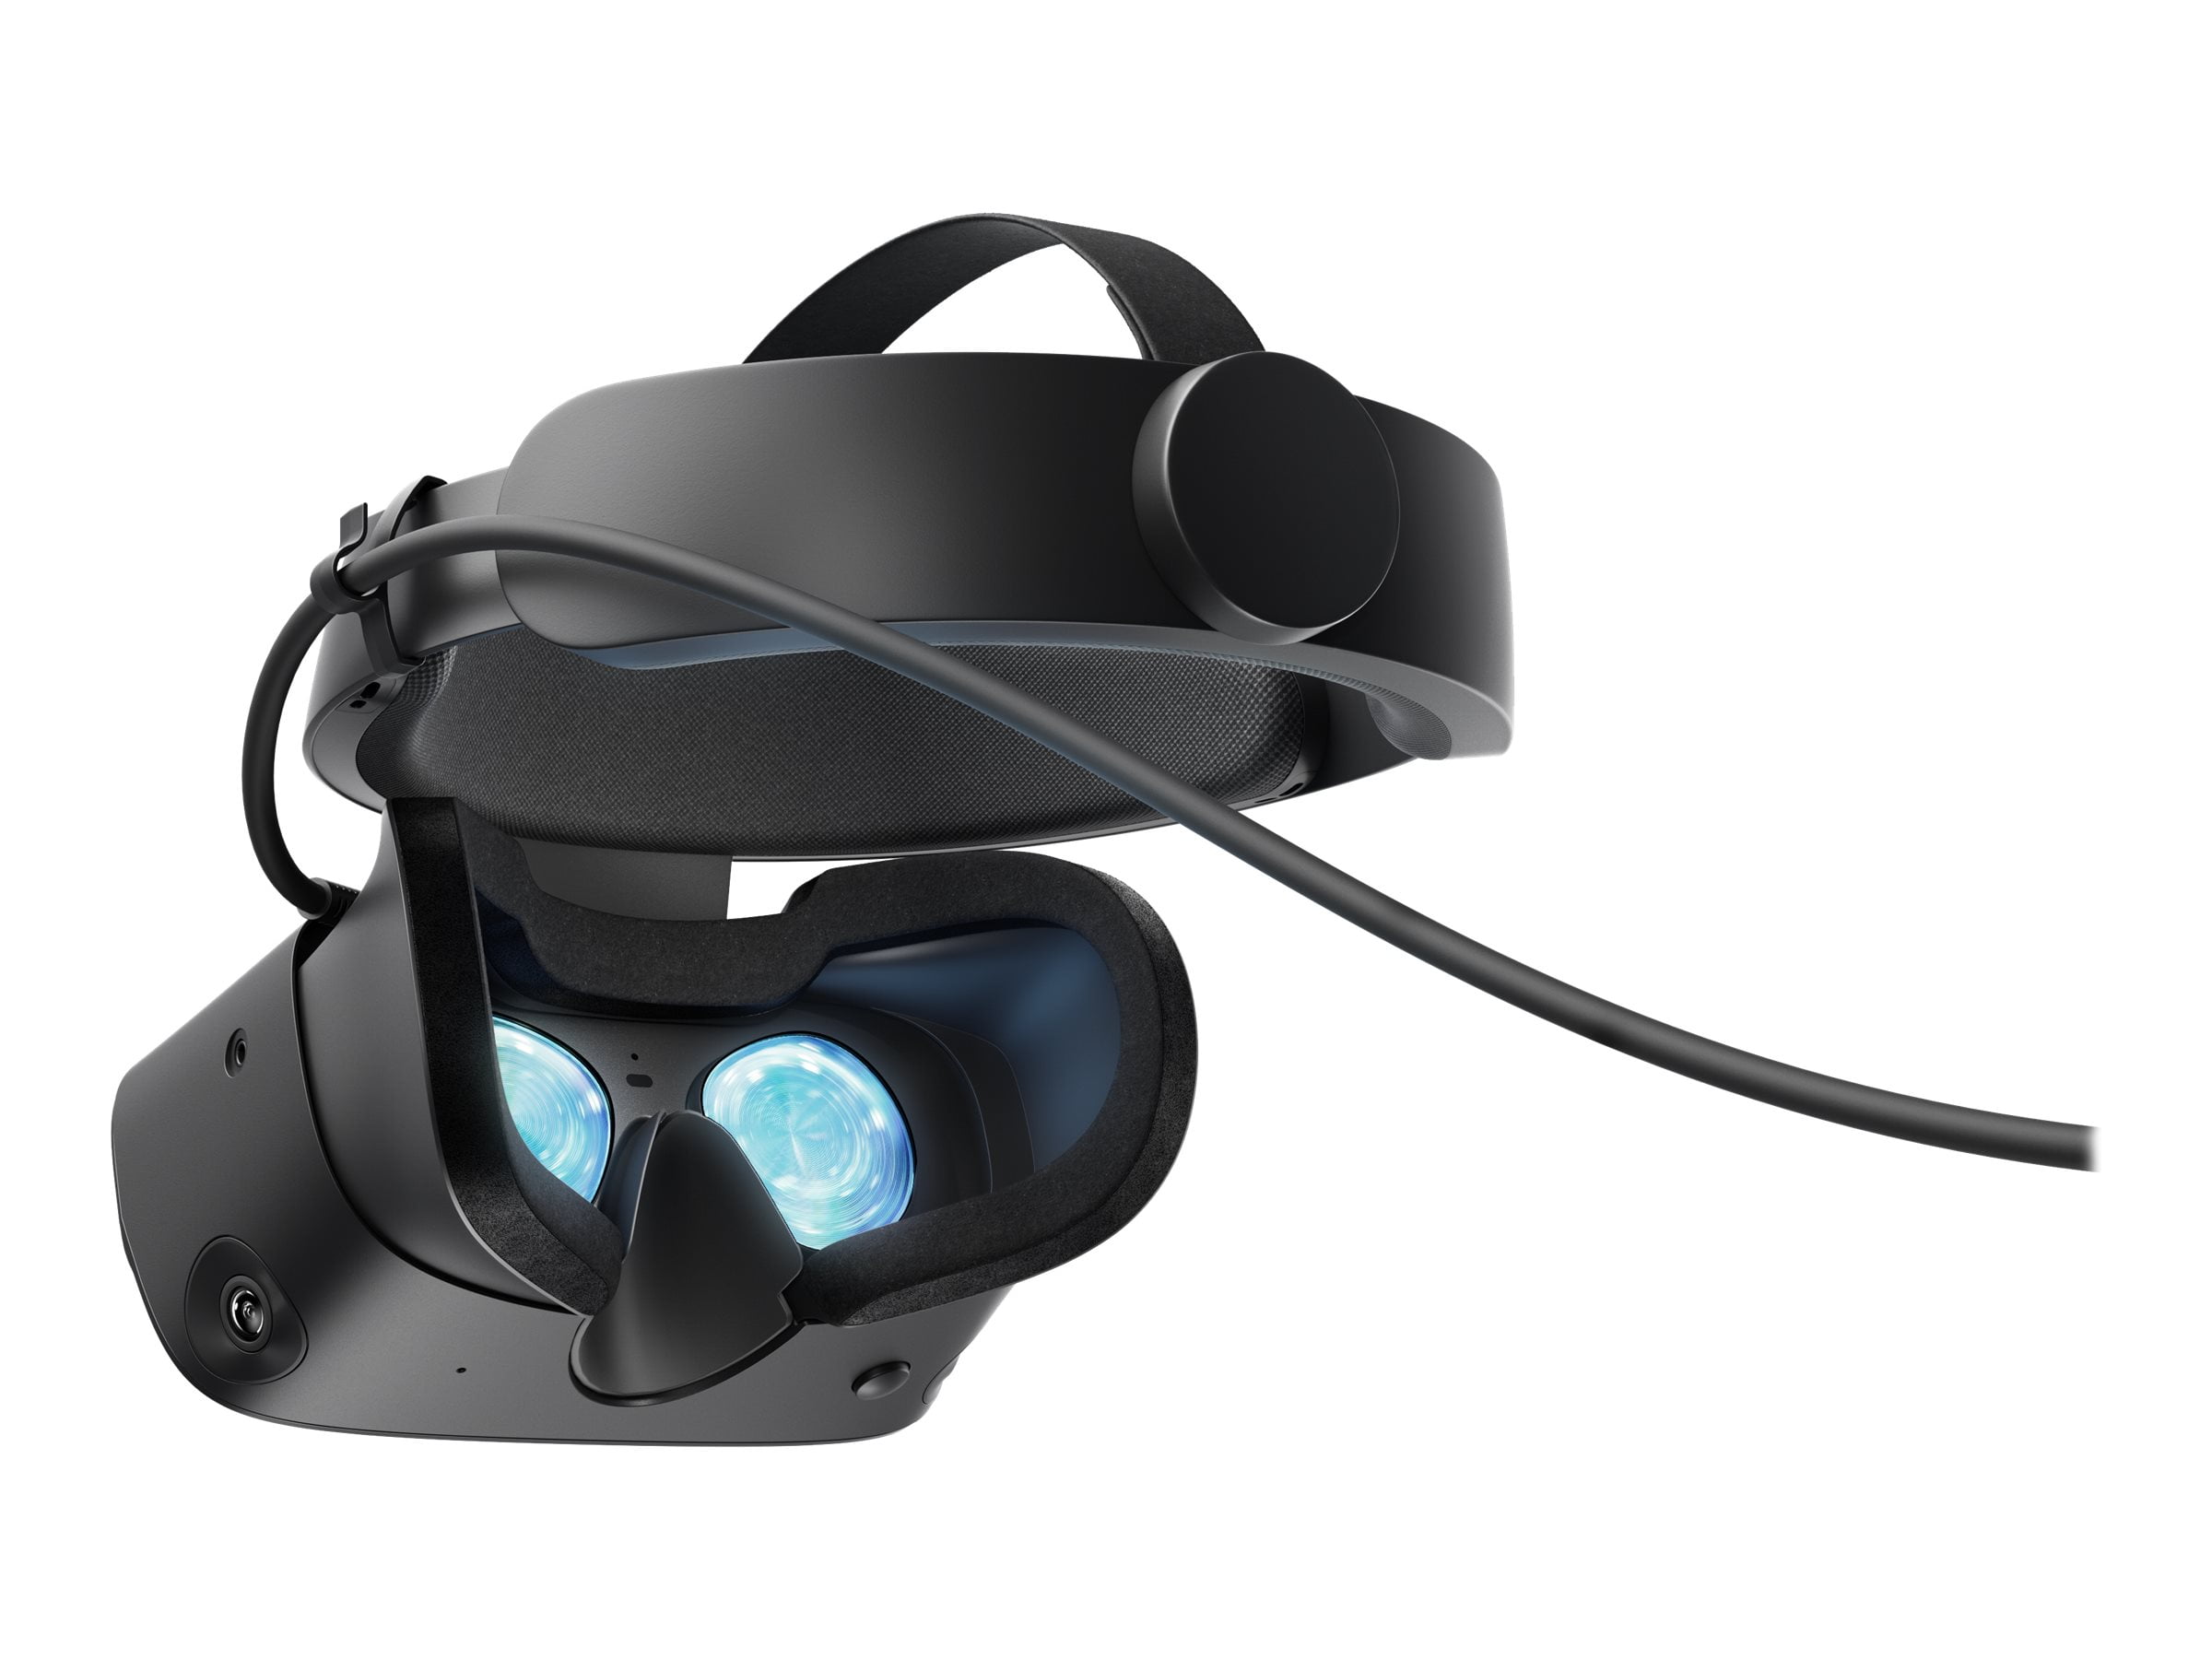 Oculus Rift S VR Gaming Headset - Walmart.com